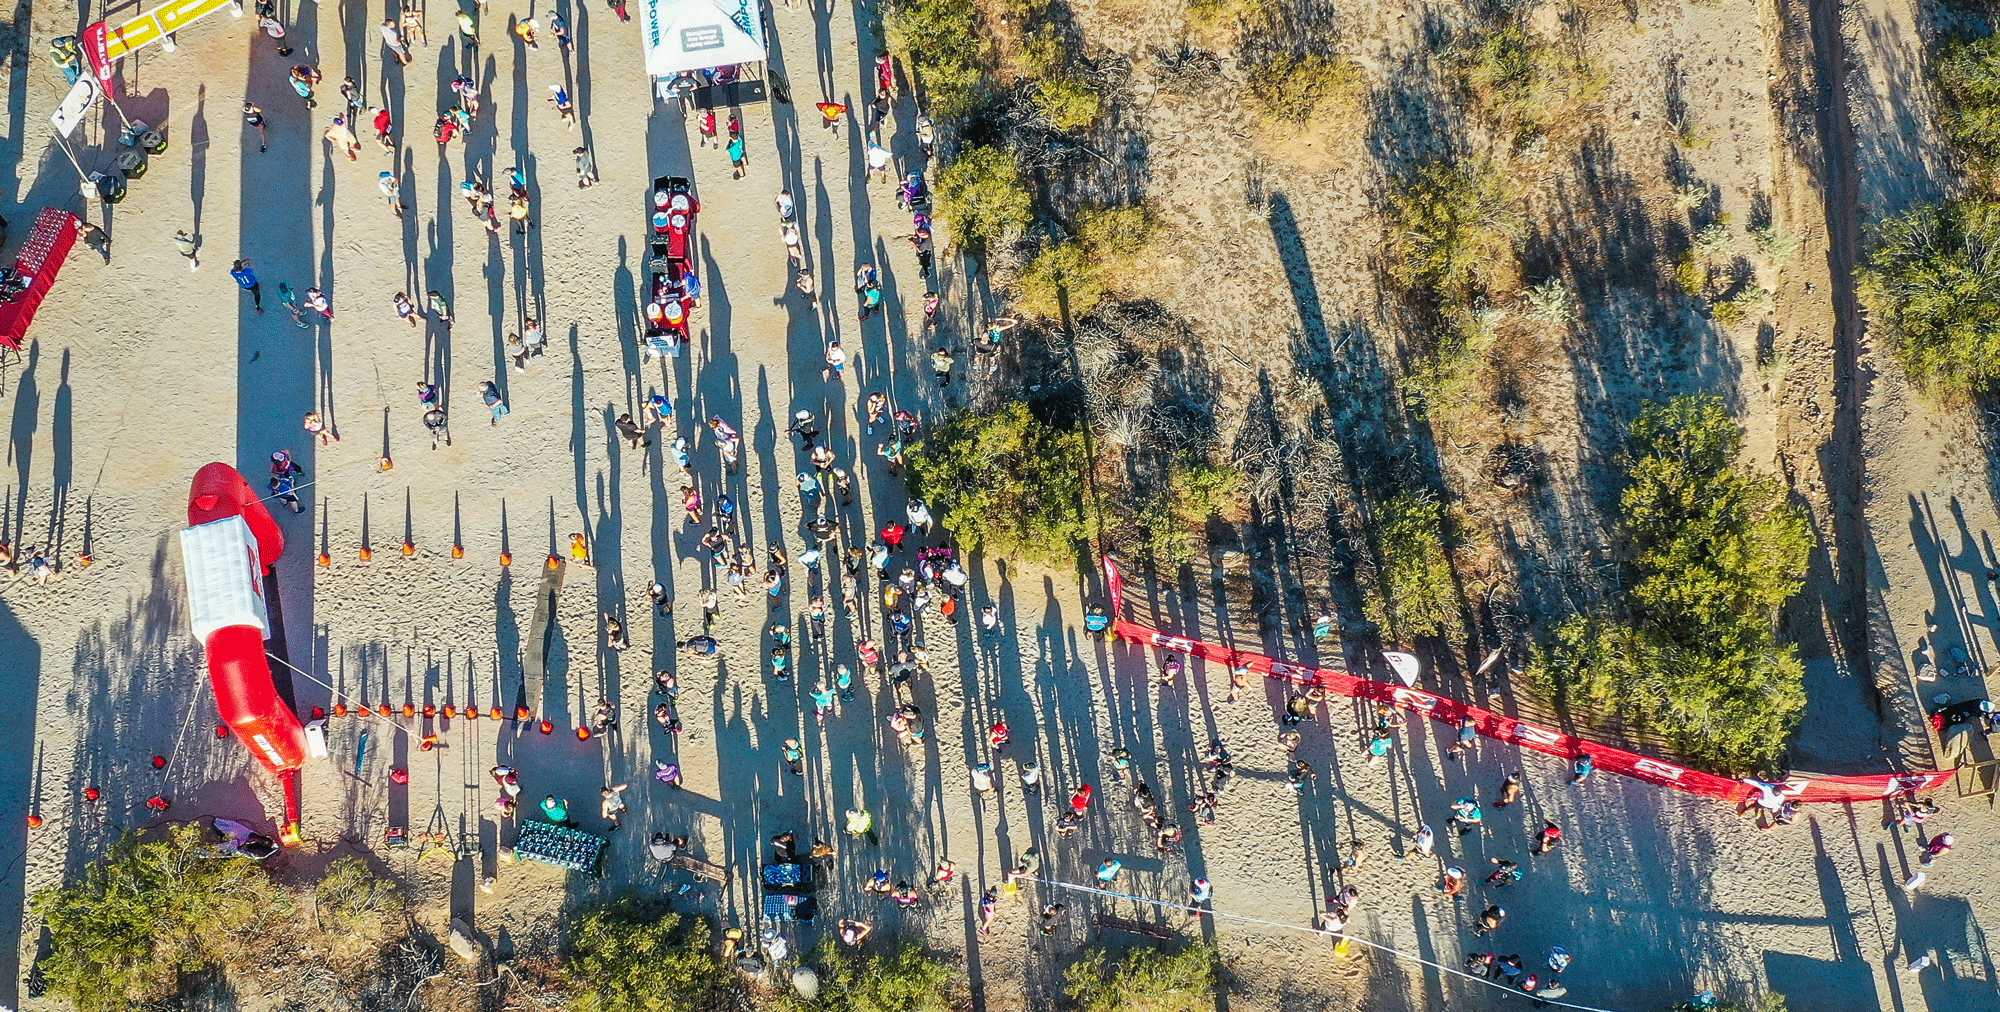 Arizona Trail Run Finish Line from Drone